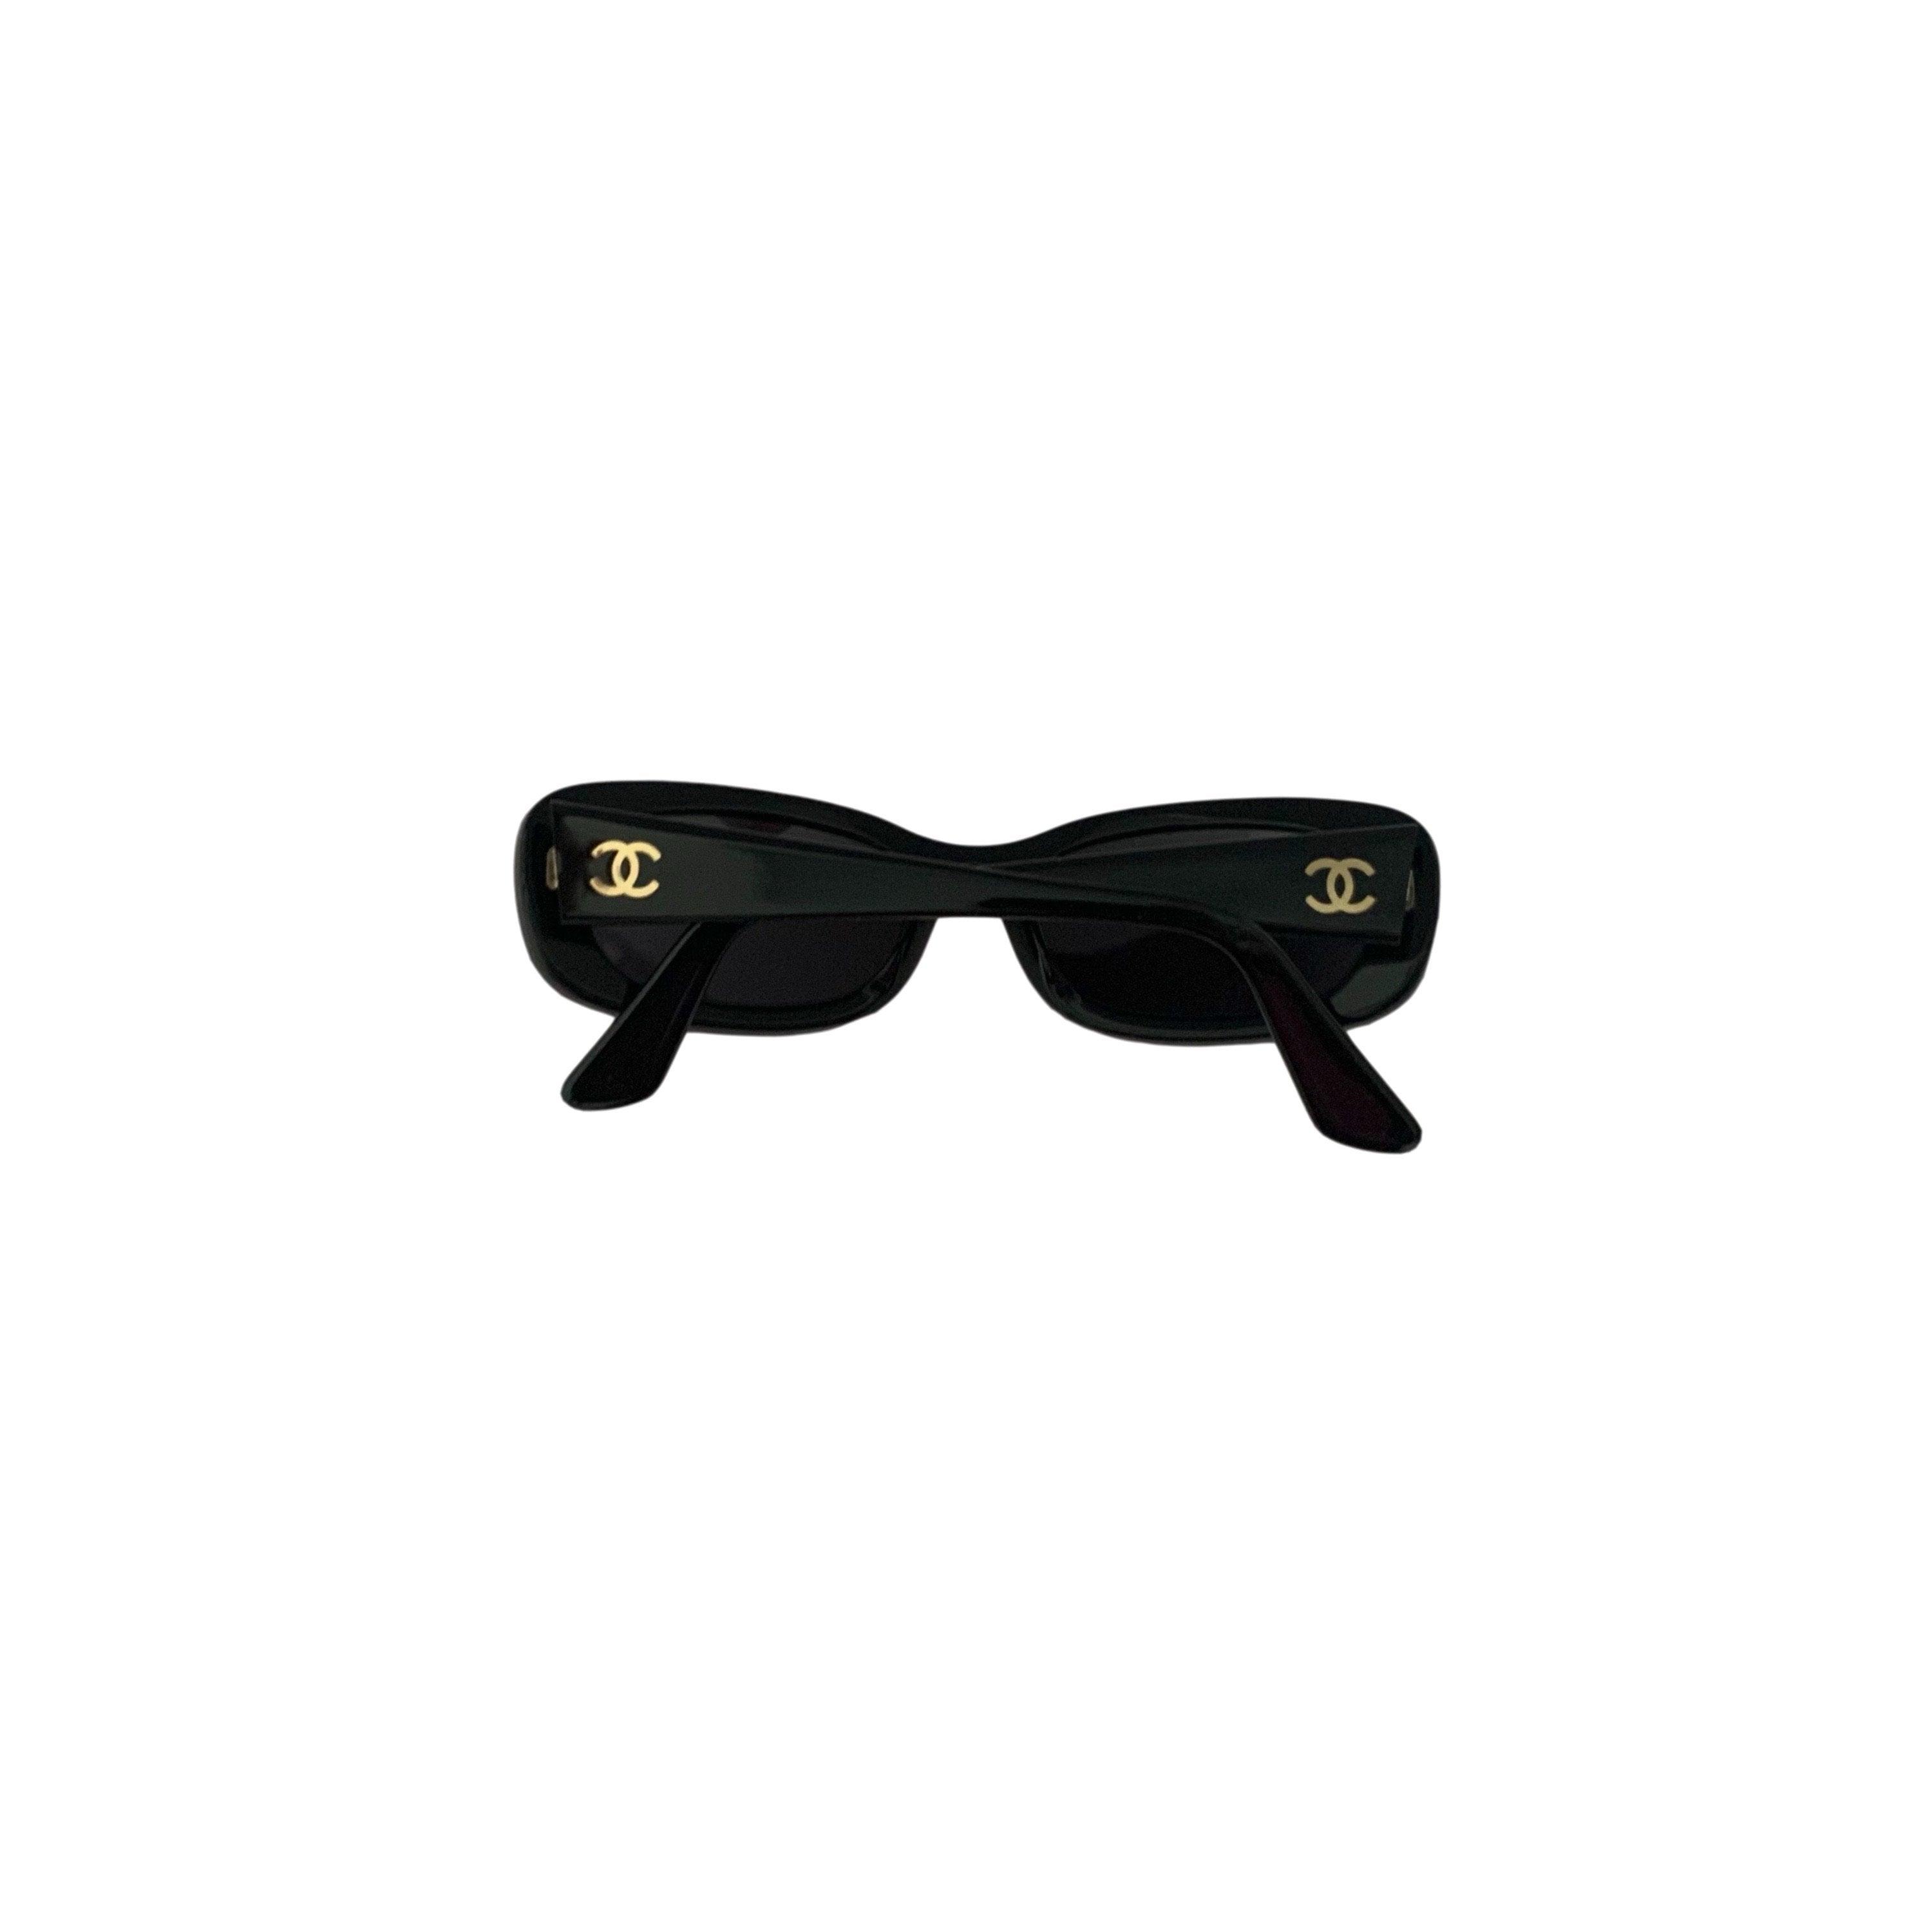 Treasures of NYC - Chanel Black Small Logo Sunglasses